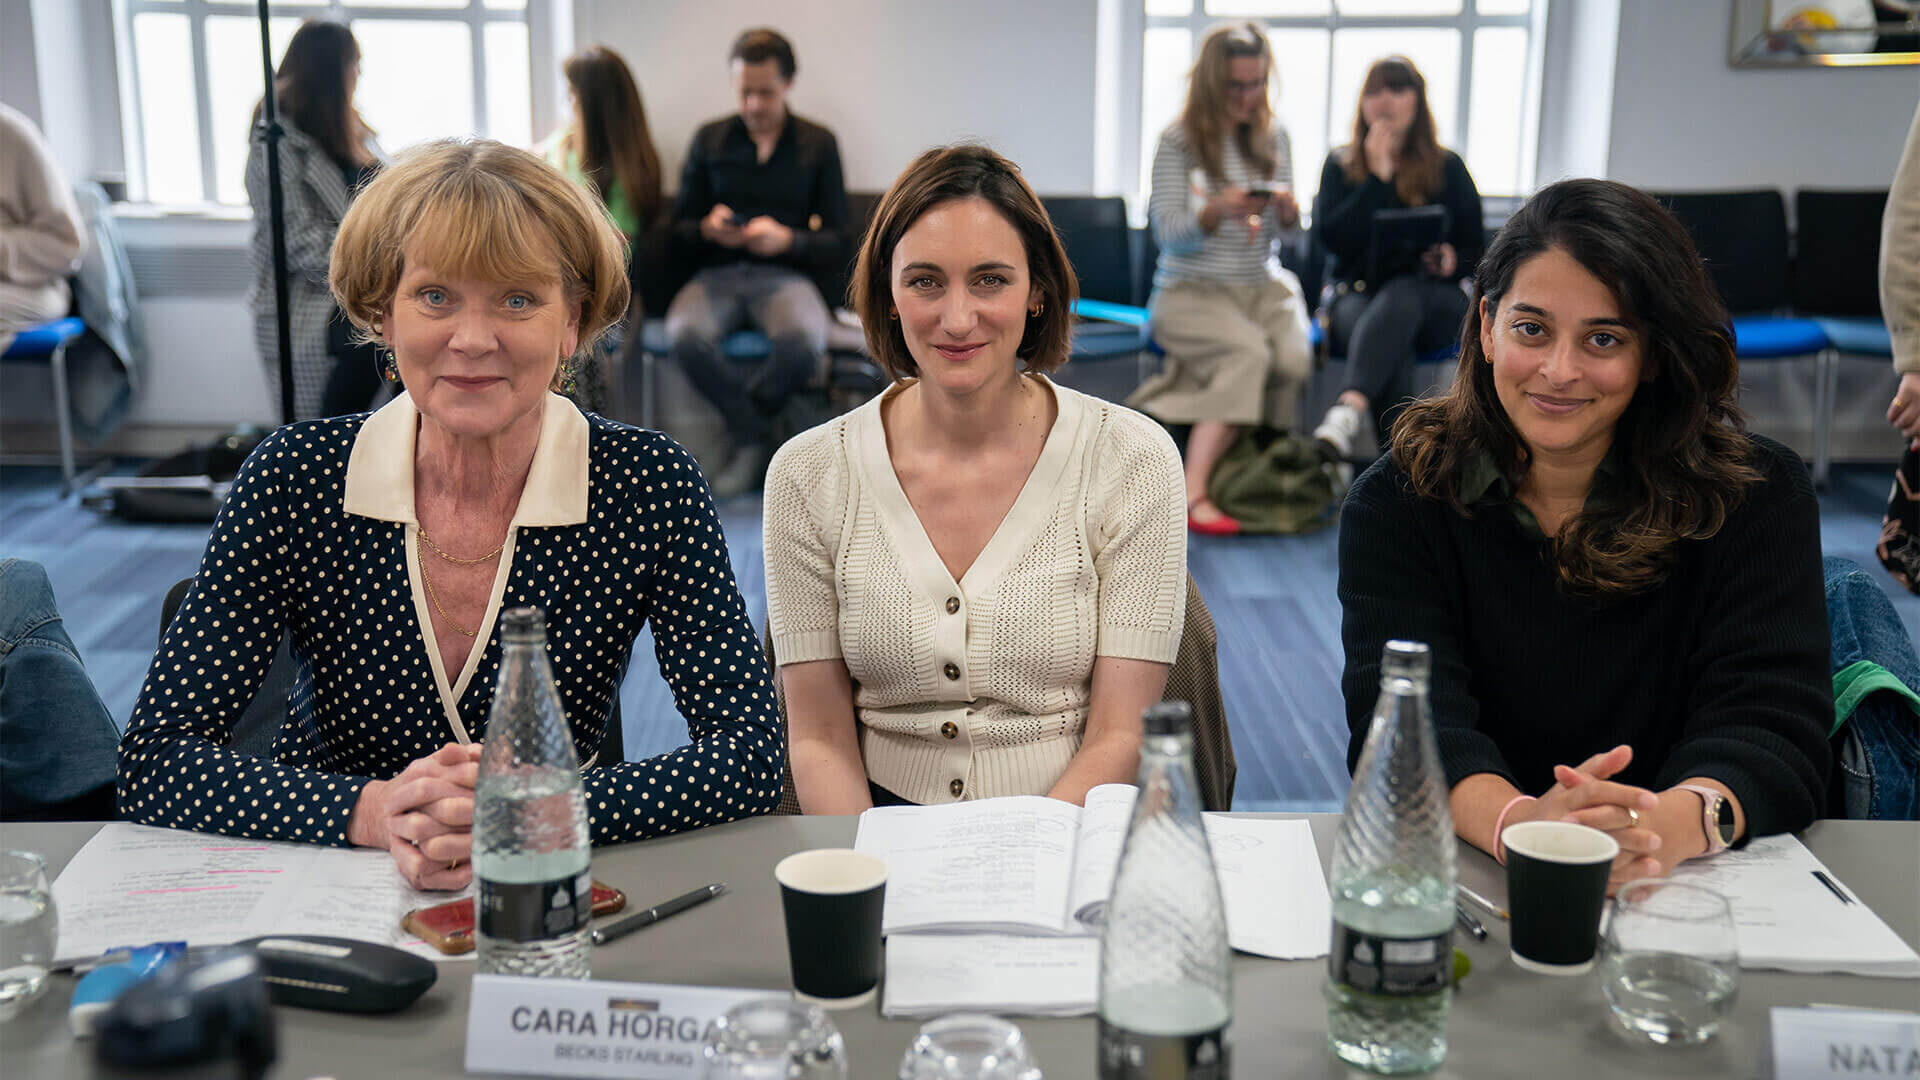 Samantha Bond, Cara Horgan and Natalie Dew at The Marlow Murder Club script read-through.